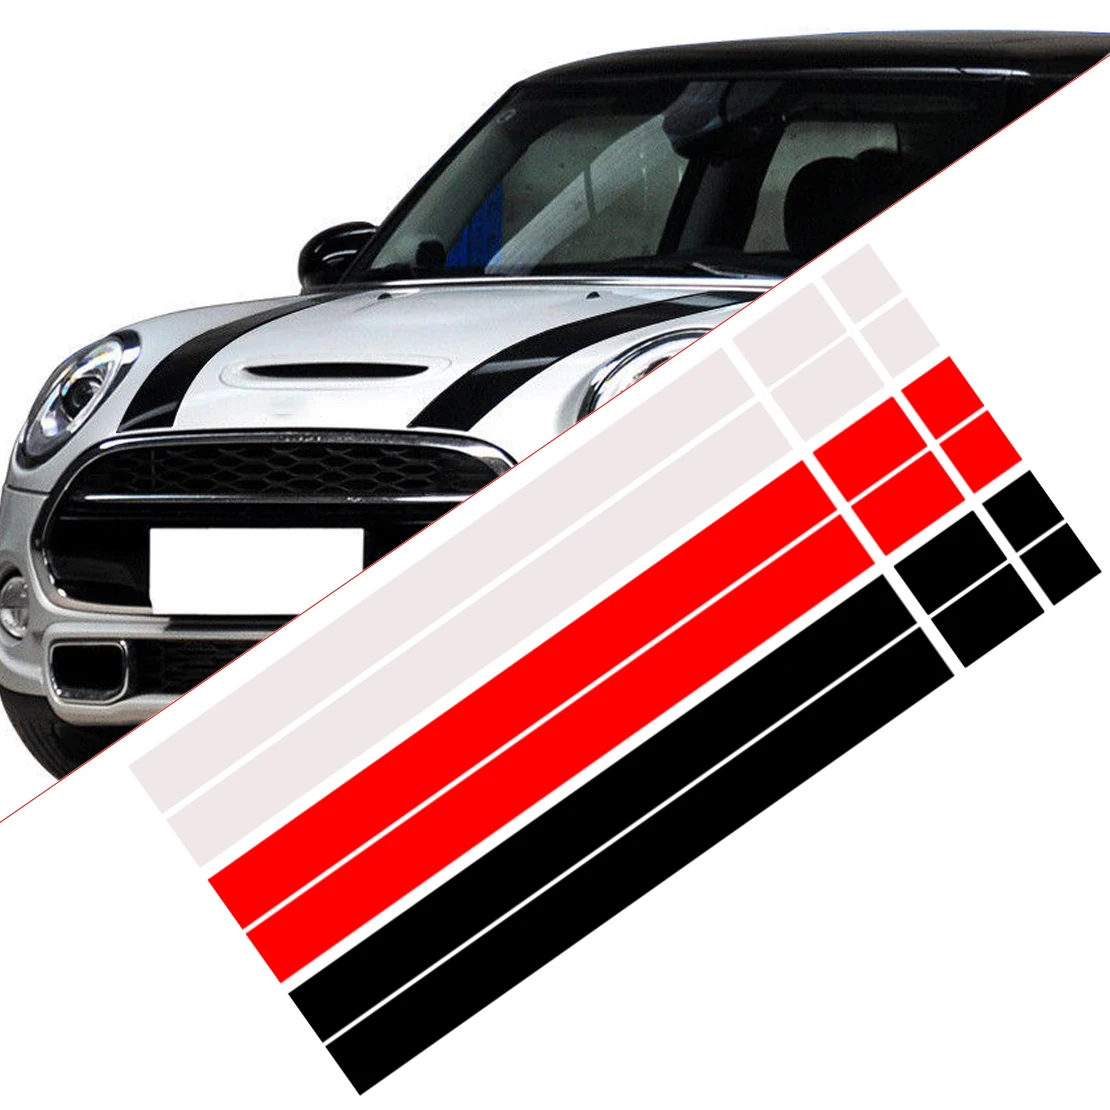 

CITALL 2Pcs Vinyl Car Bonnet Stripes Hood Sticker Cover Decal dWm2754536 Fit for MINI Cooper R50 R53 R56 R55 Black/White/Red